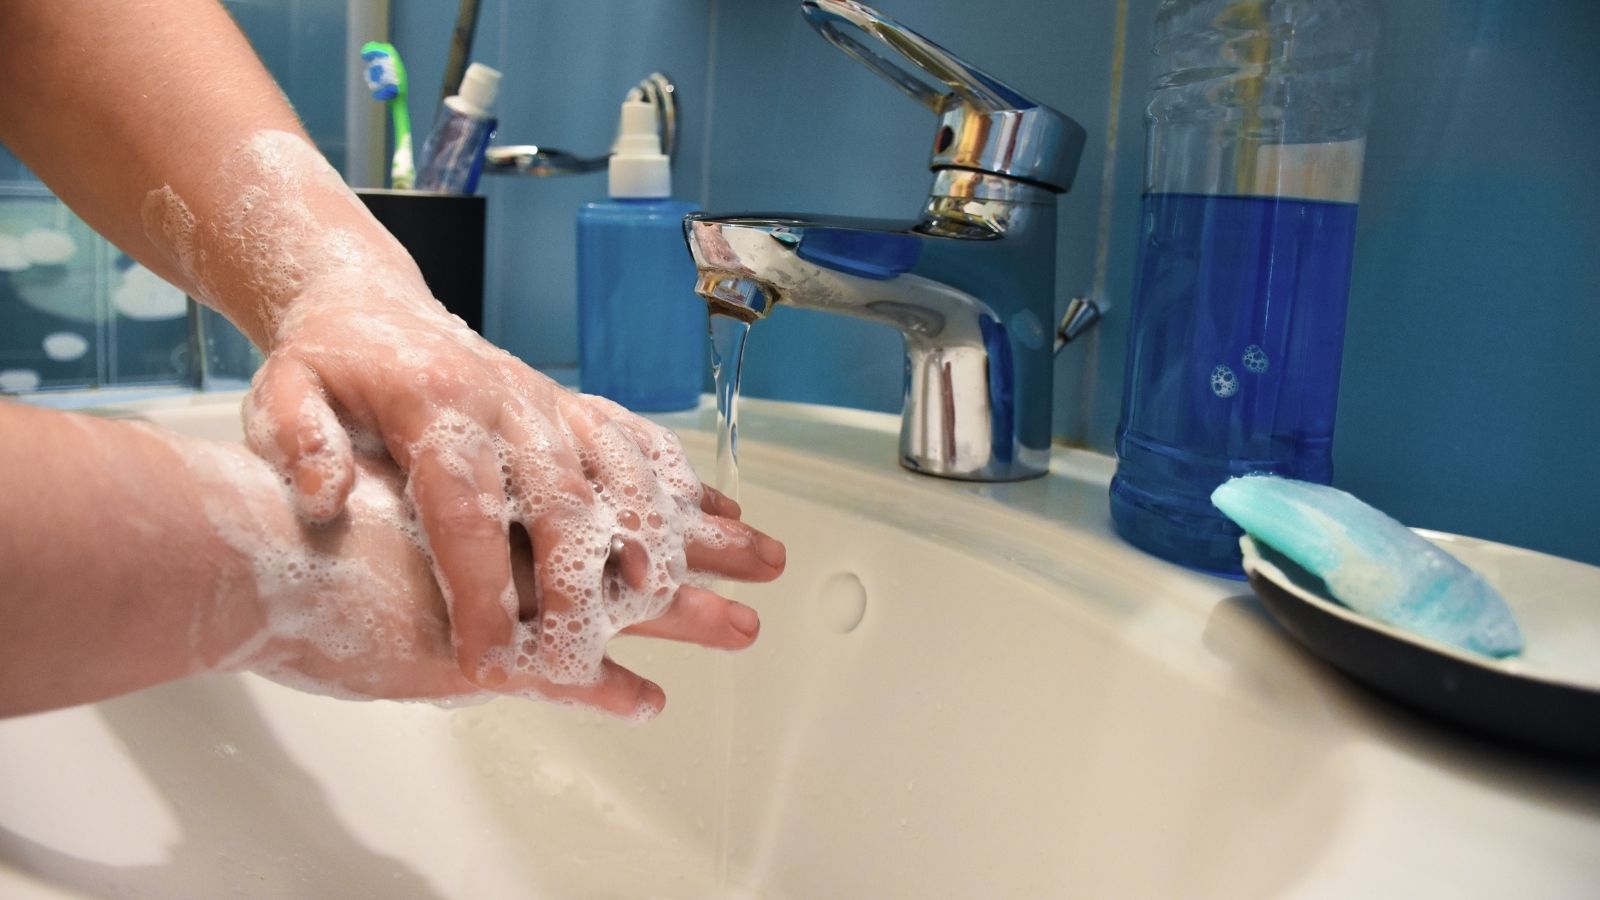 Wash your hands using antibacterial soap